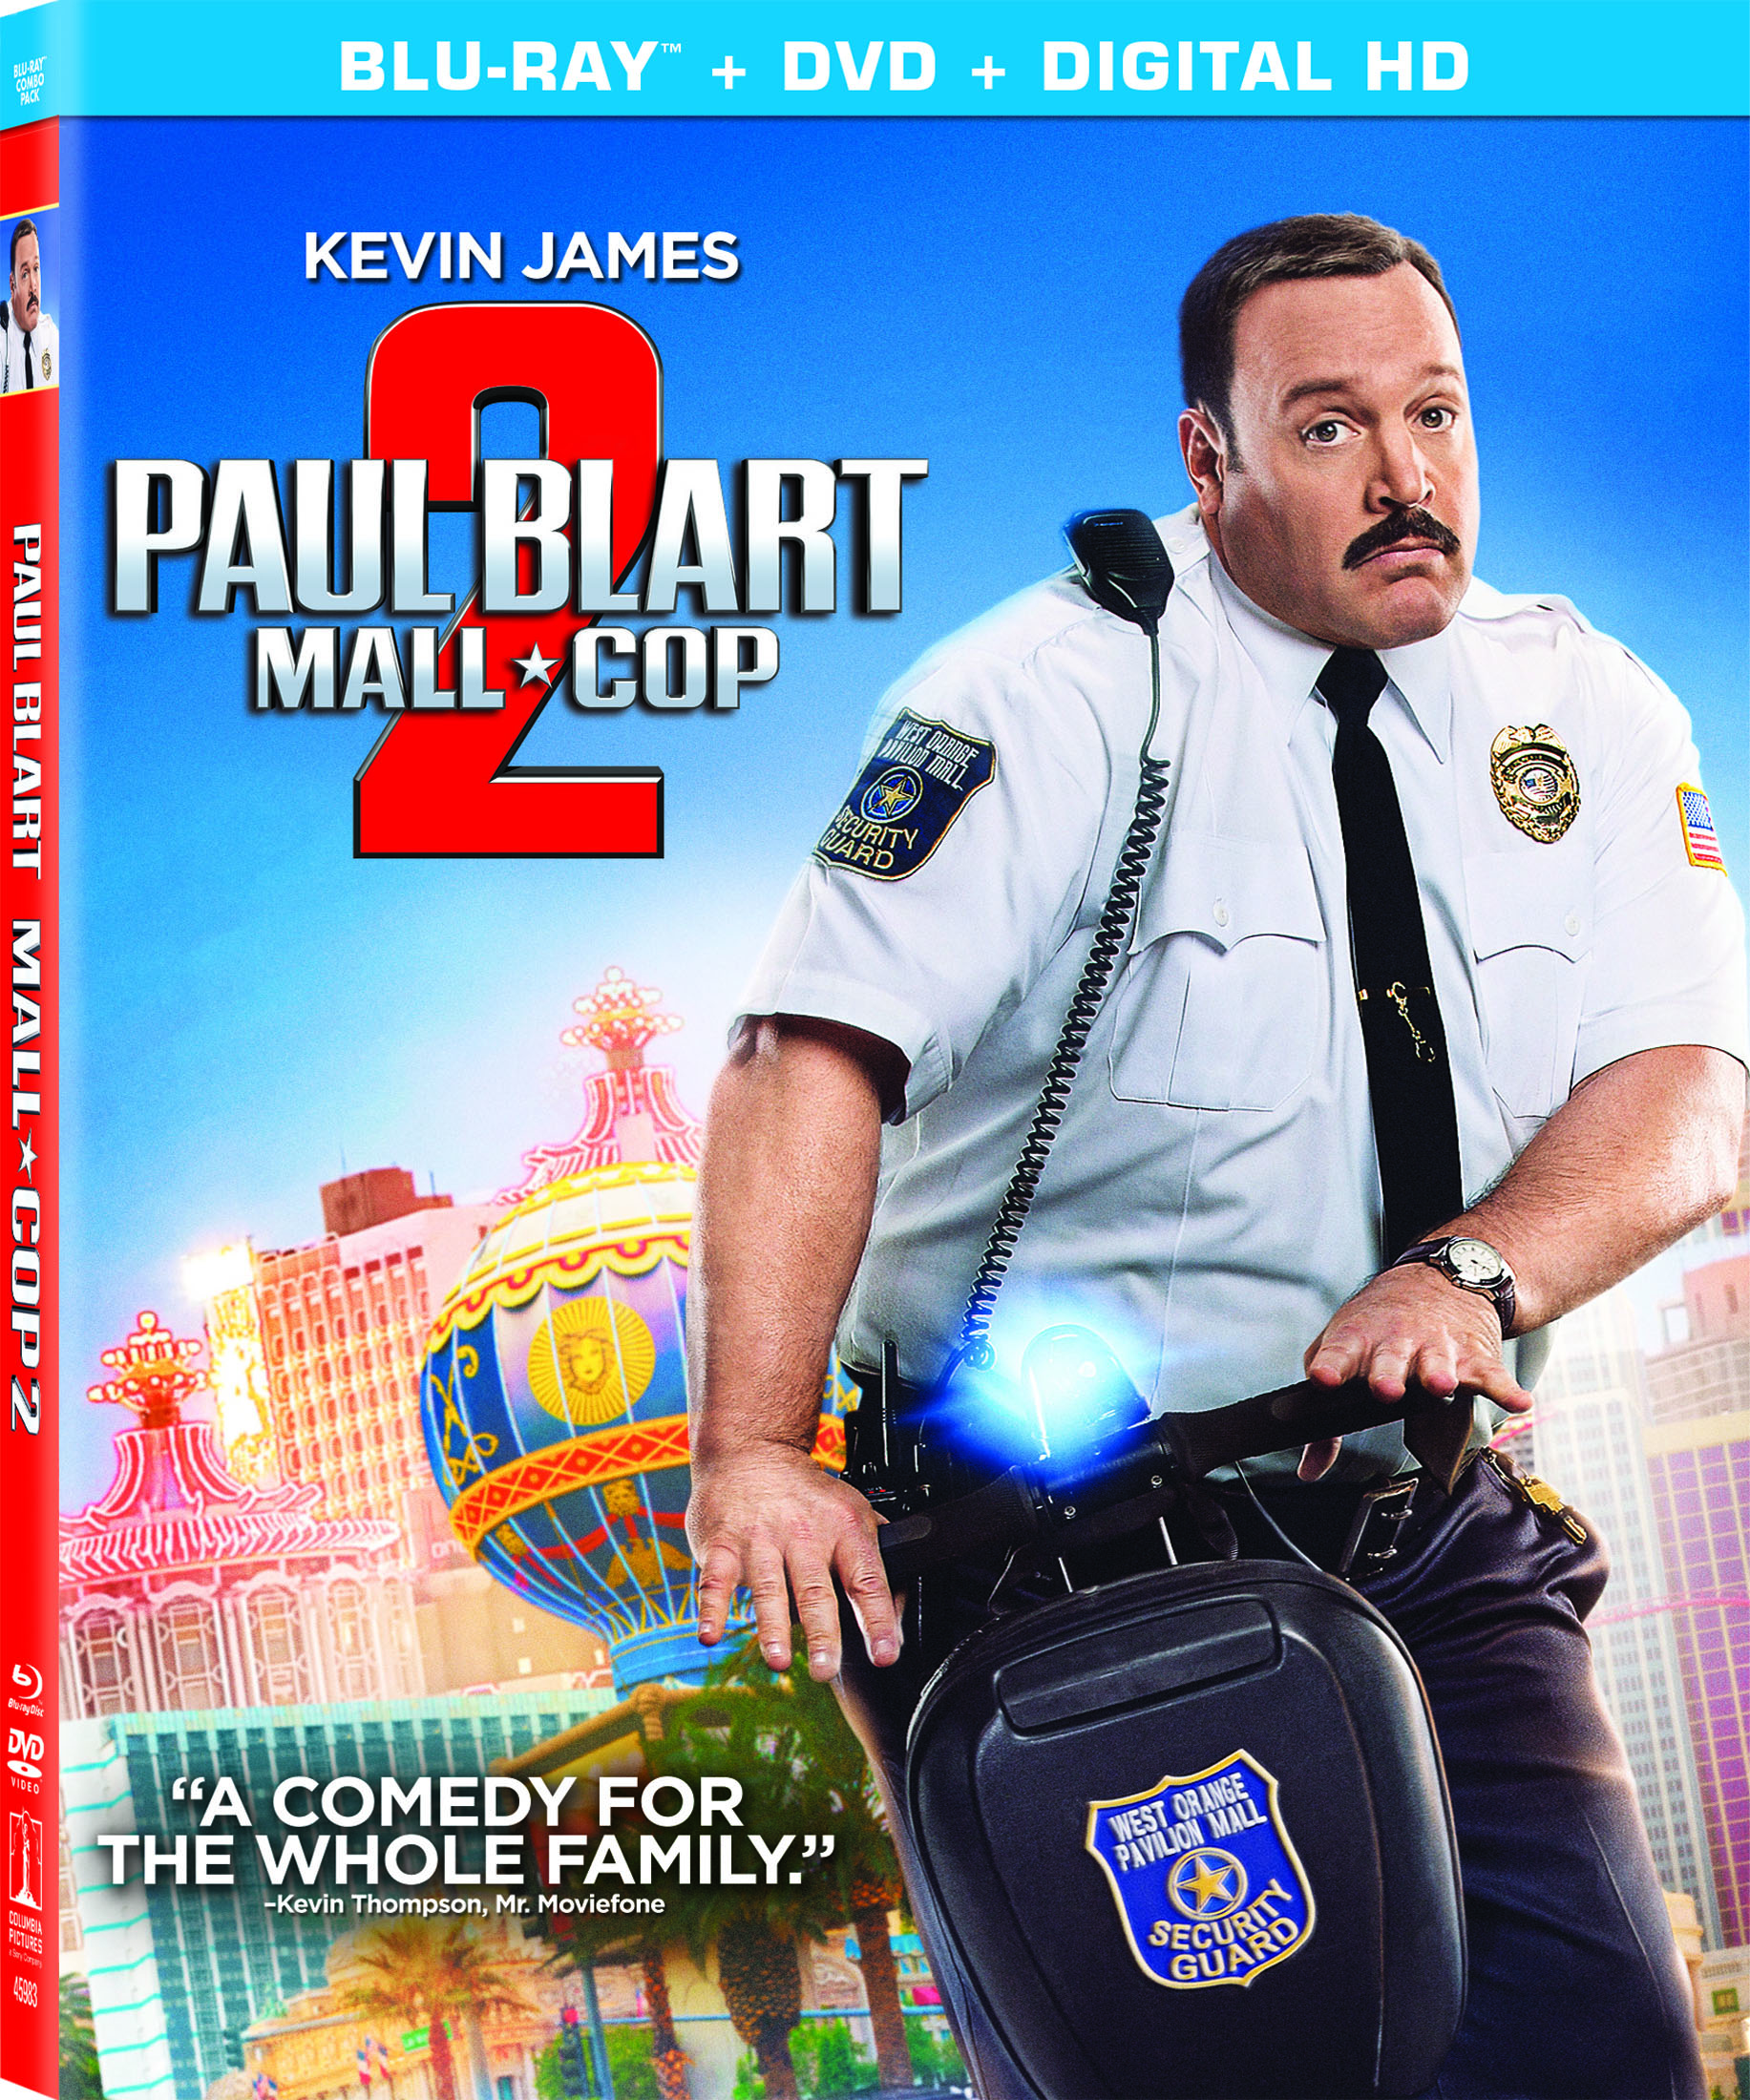 Paul Blart Mall Cop 2 Blu-ray Review